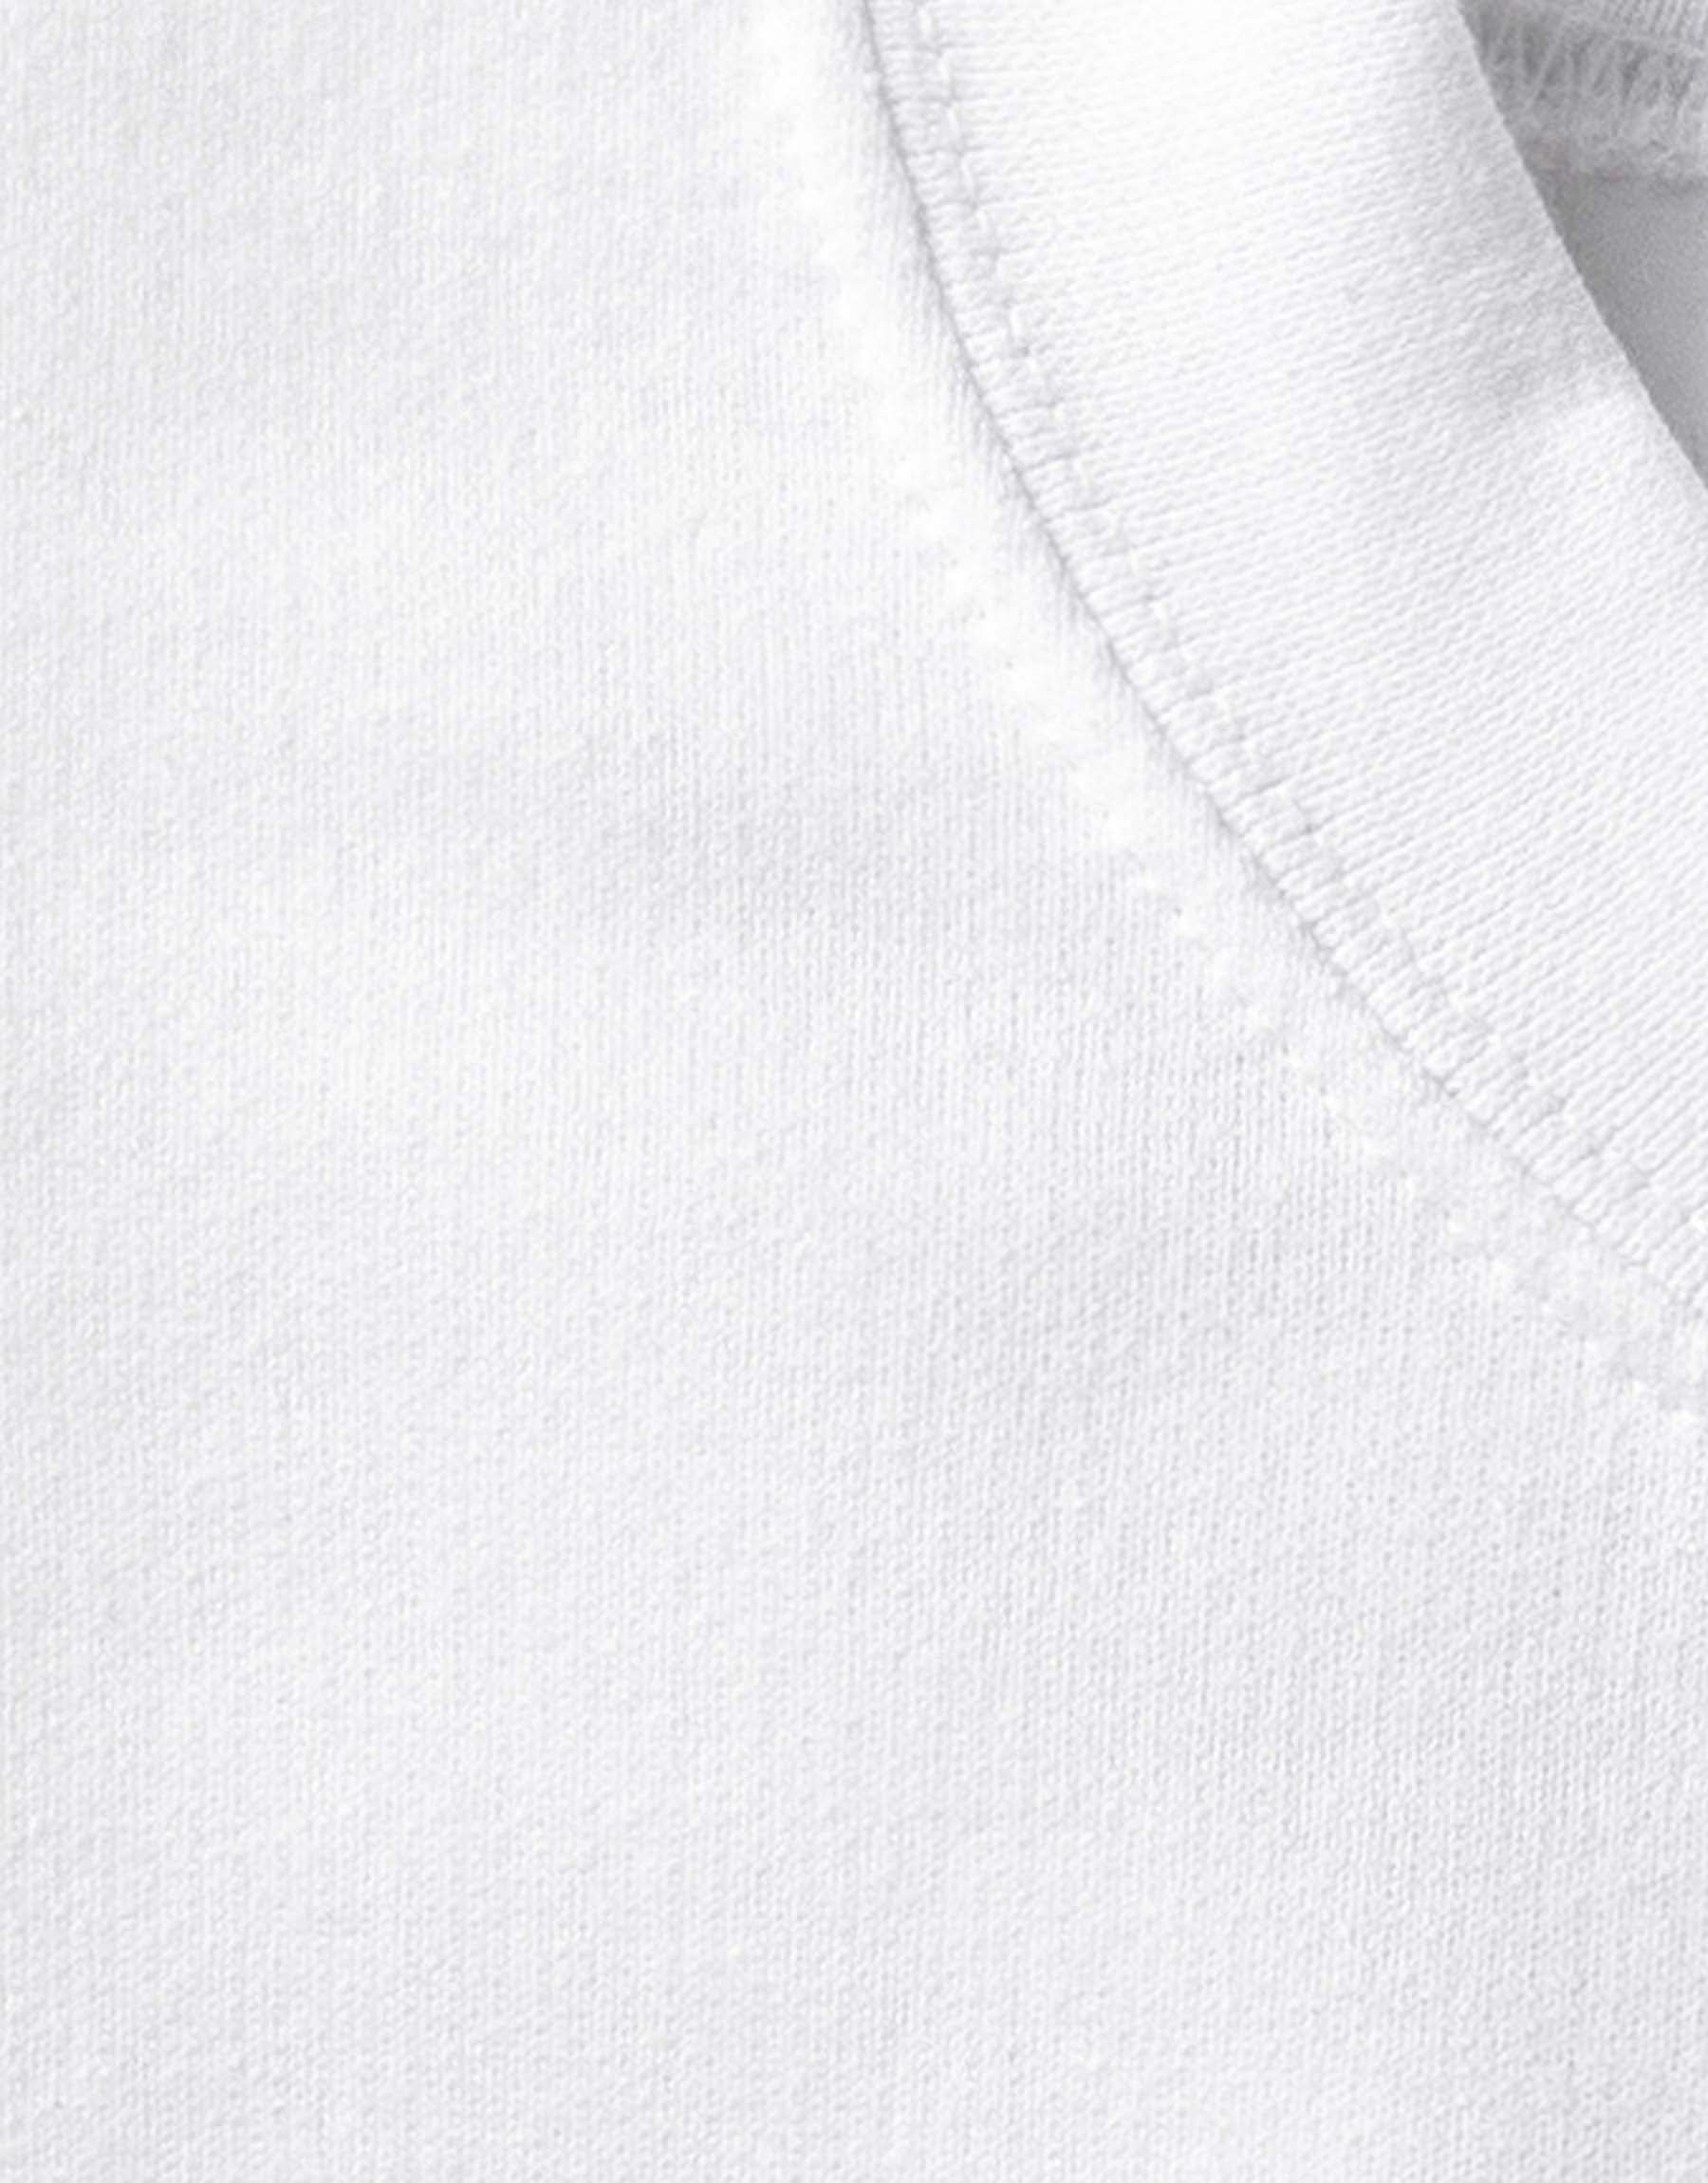 Funny Emoji Unisex White tshirt - 399.00 - TEEGURUJI - Free Shipping